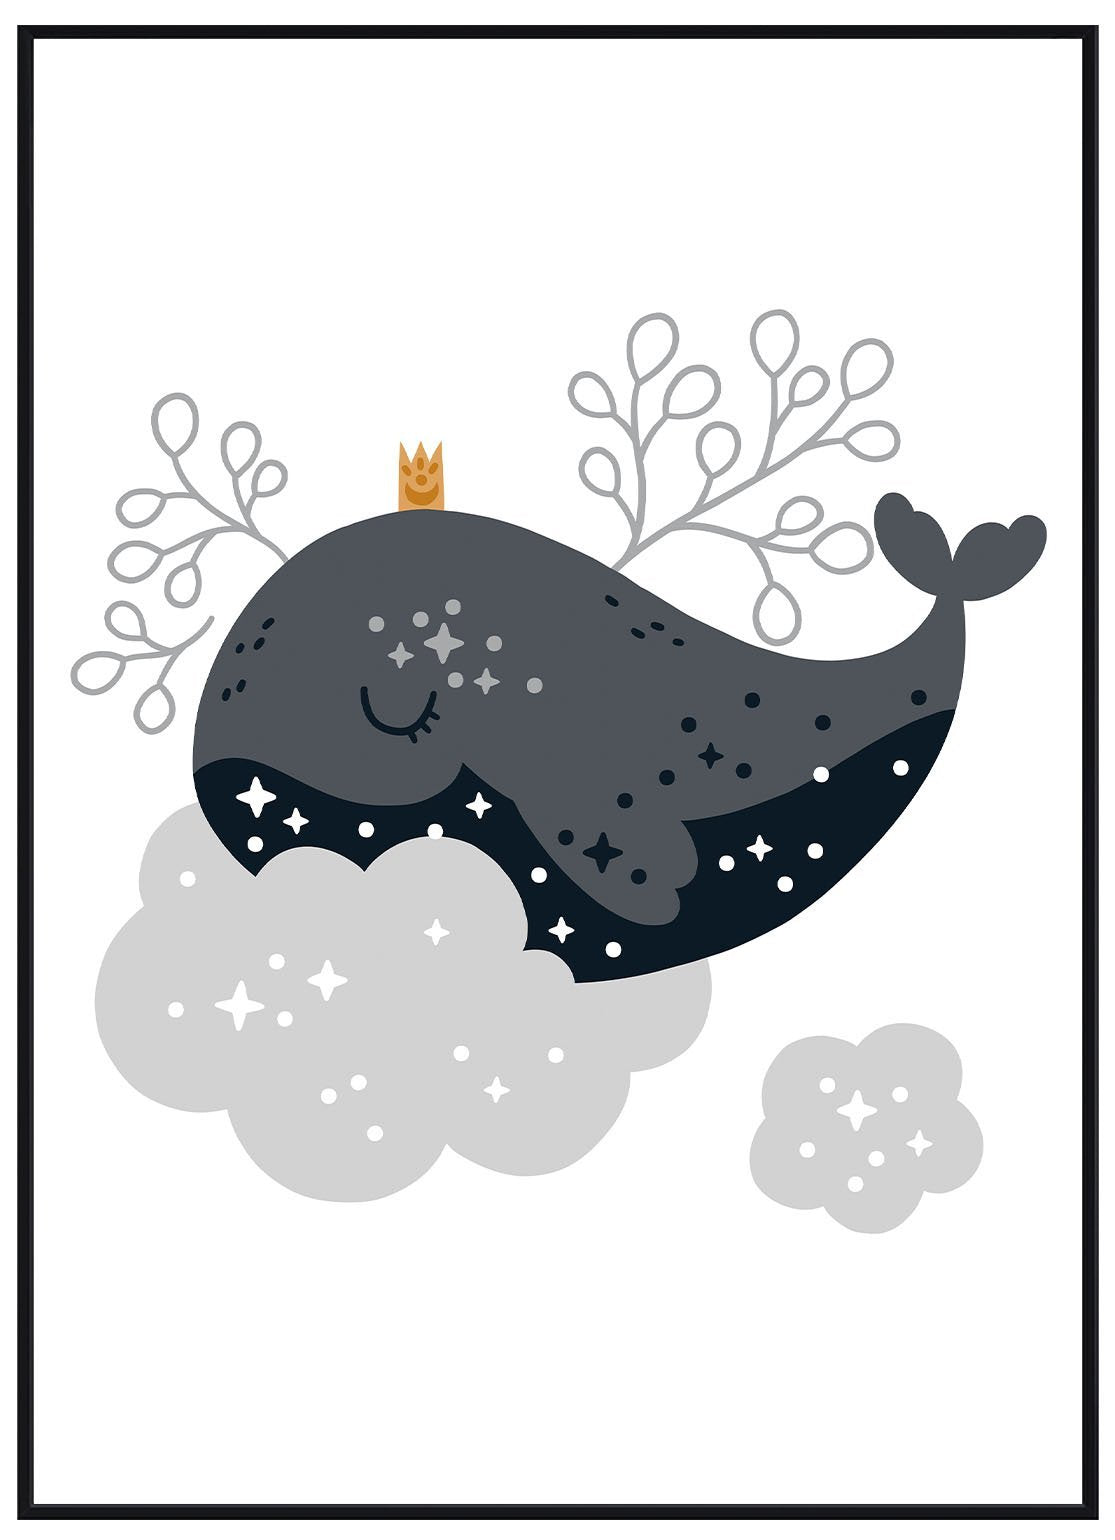 Sleeping Whale No2 - Avemfactory